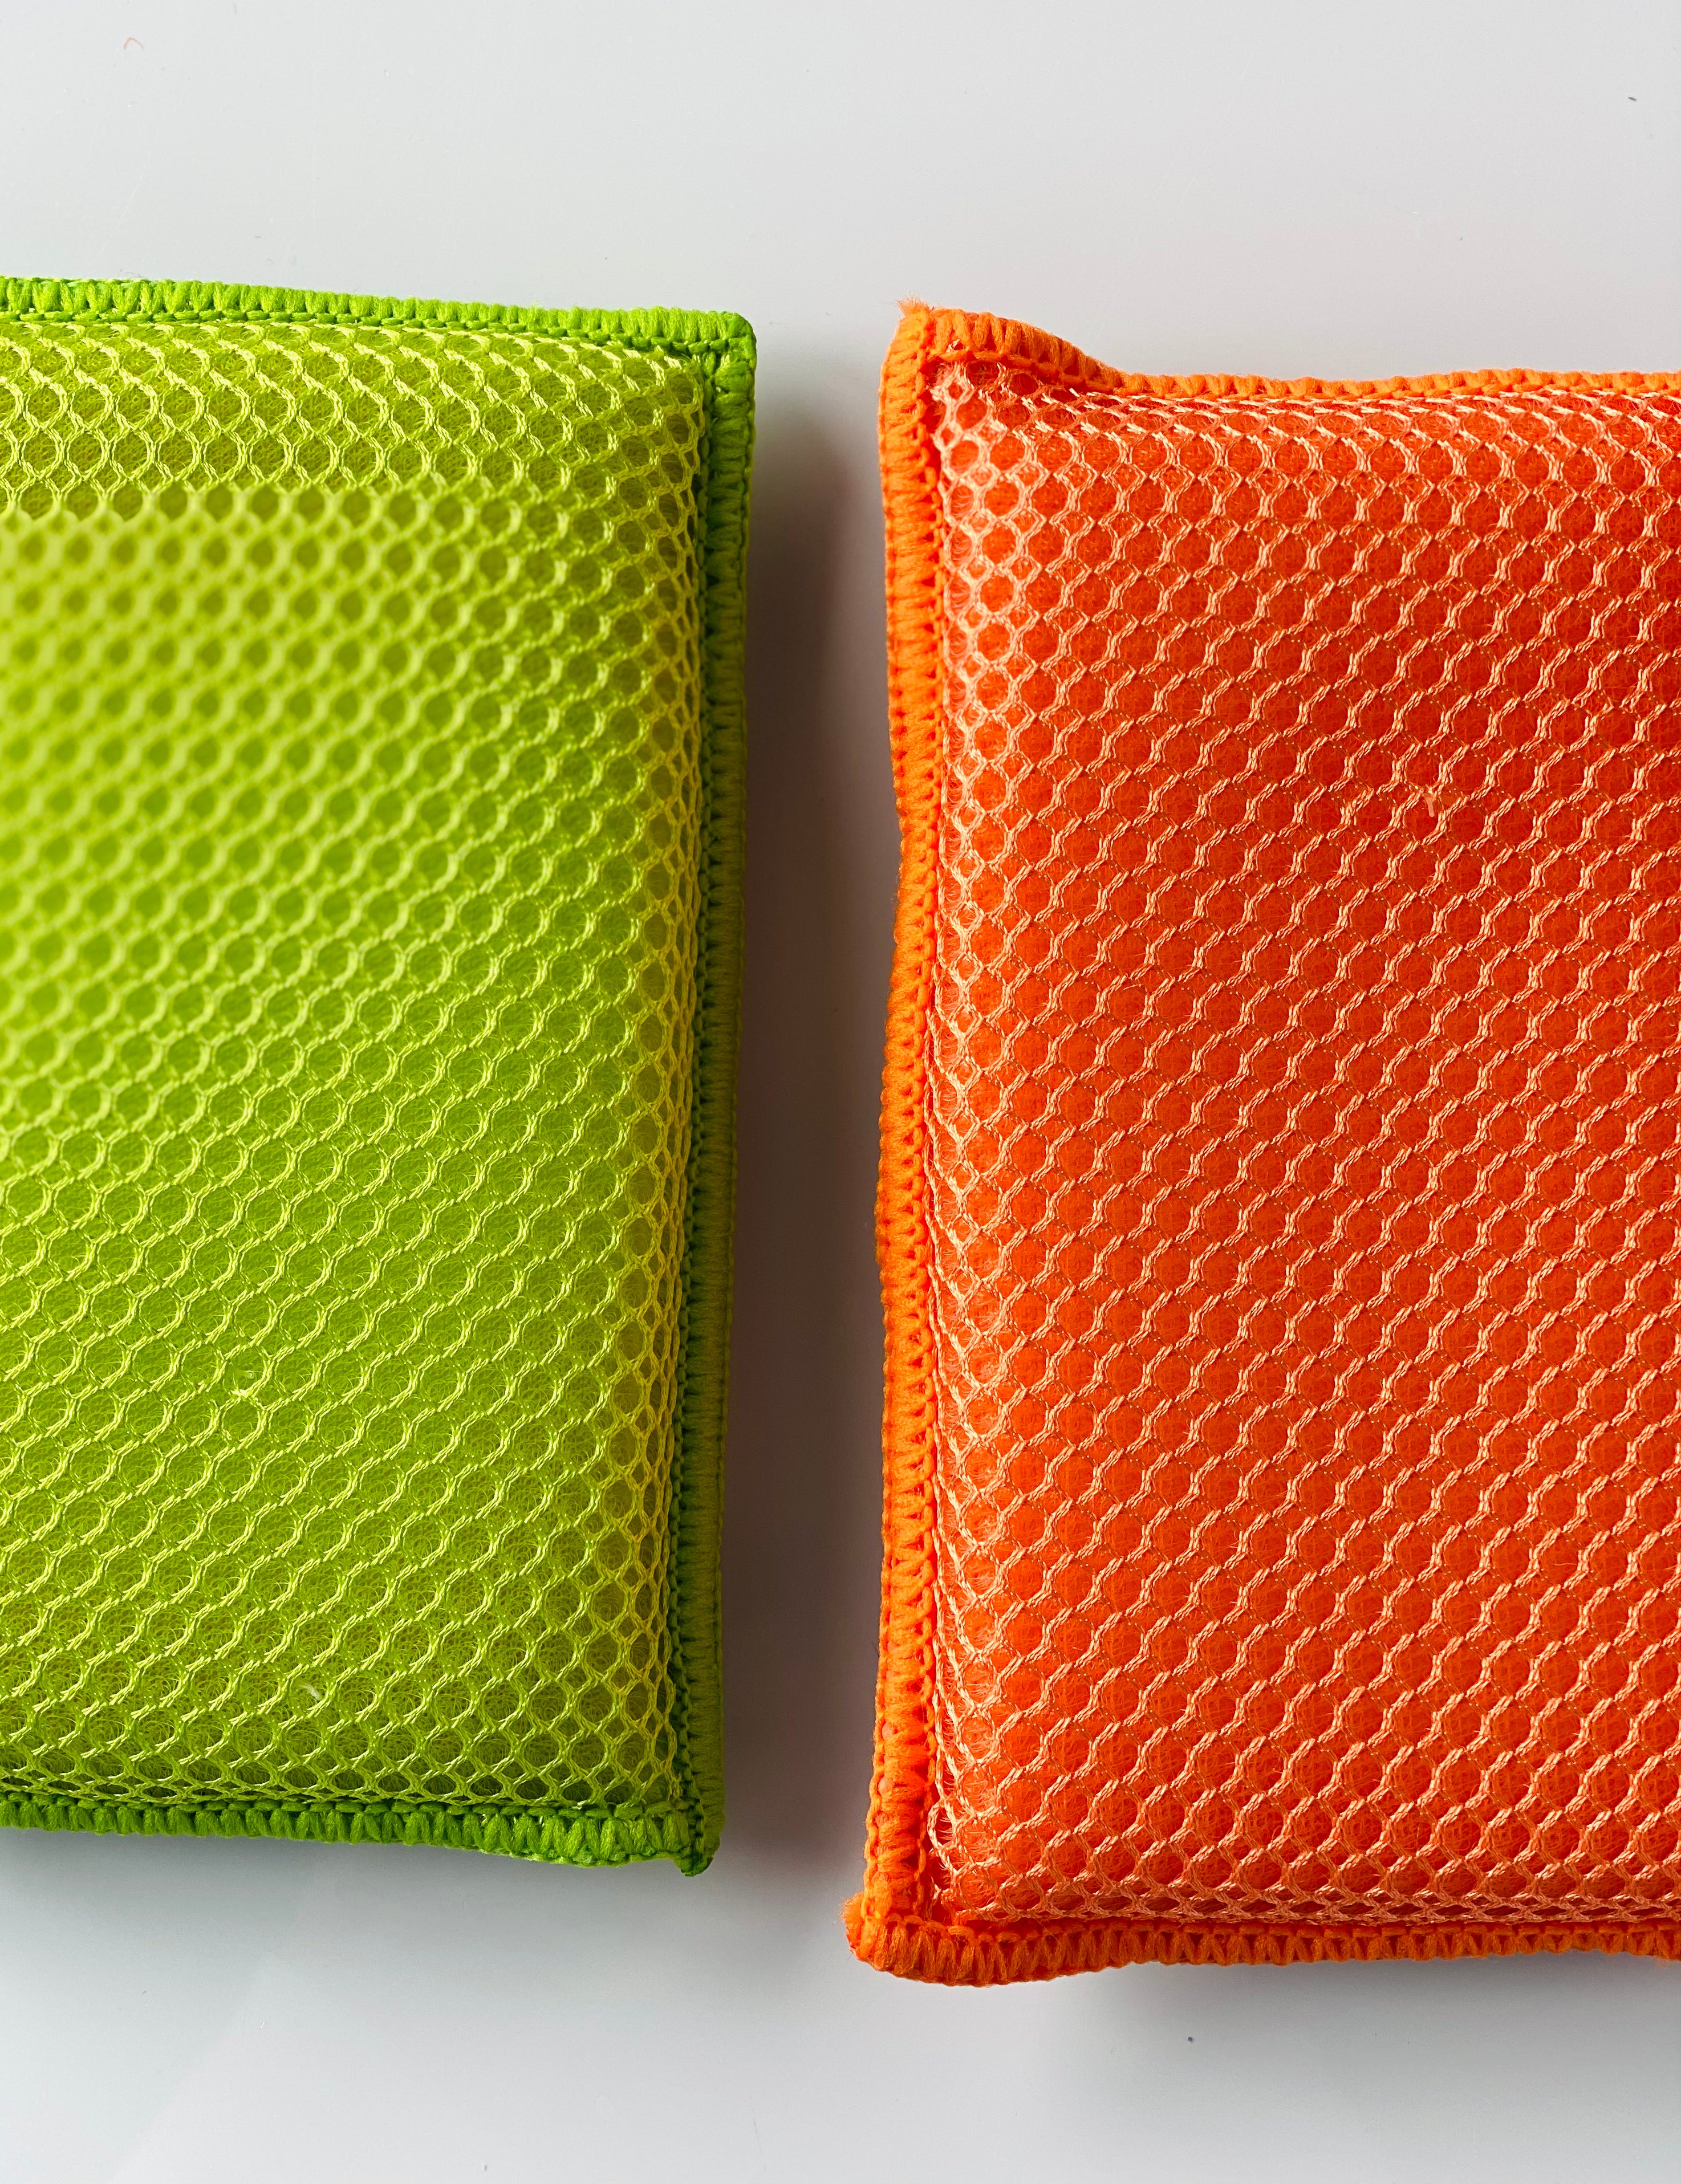 Microfiber Animal Print Sponges, 2ct